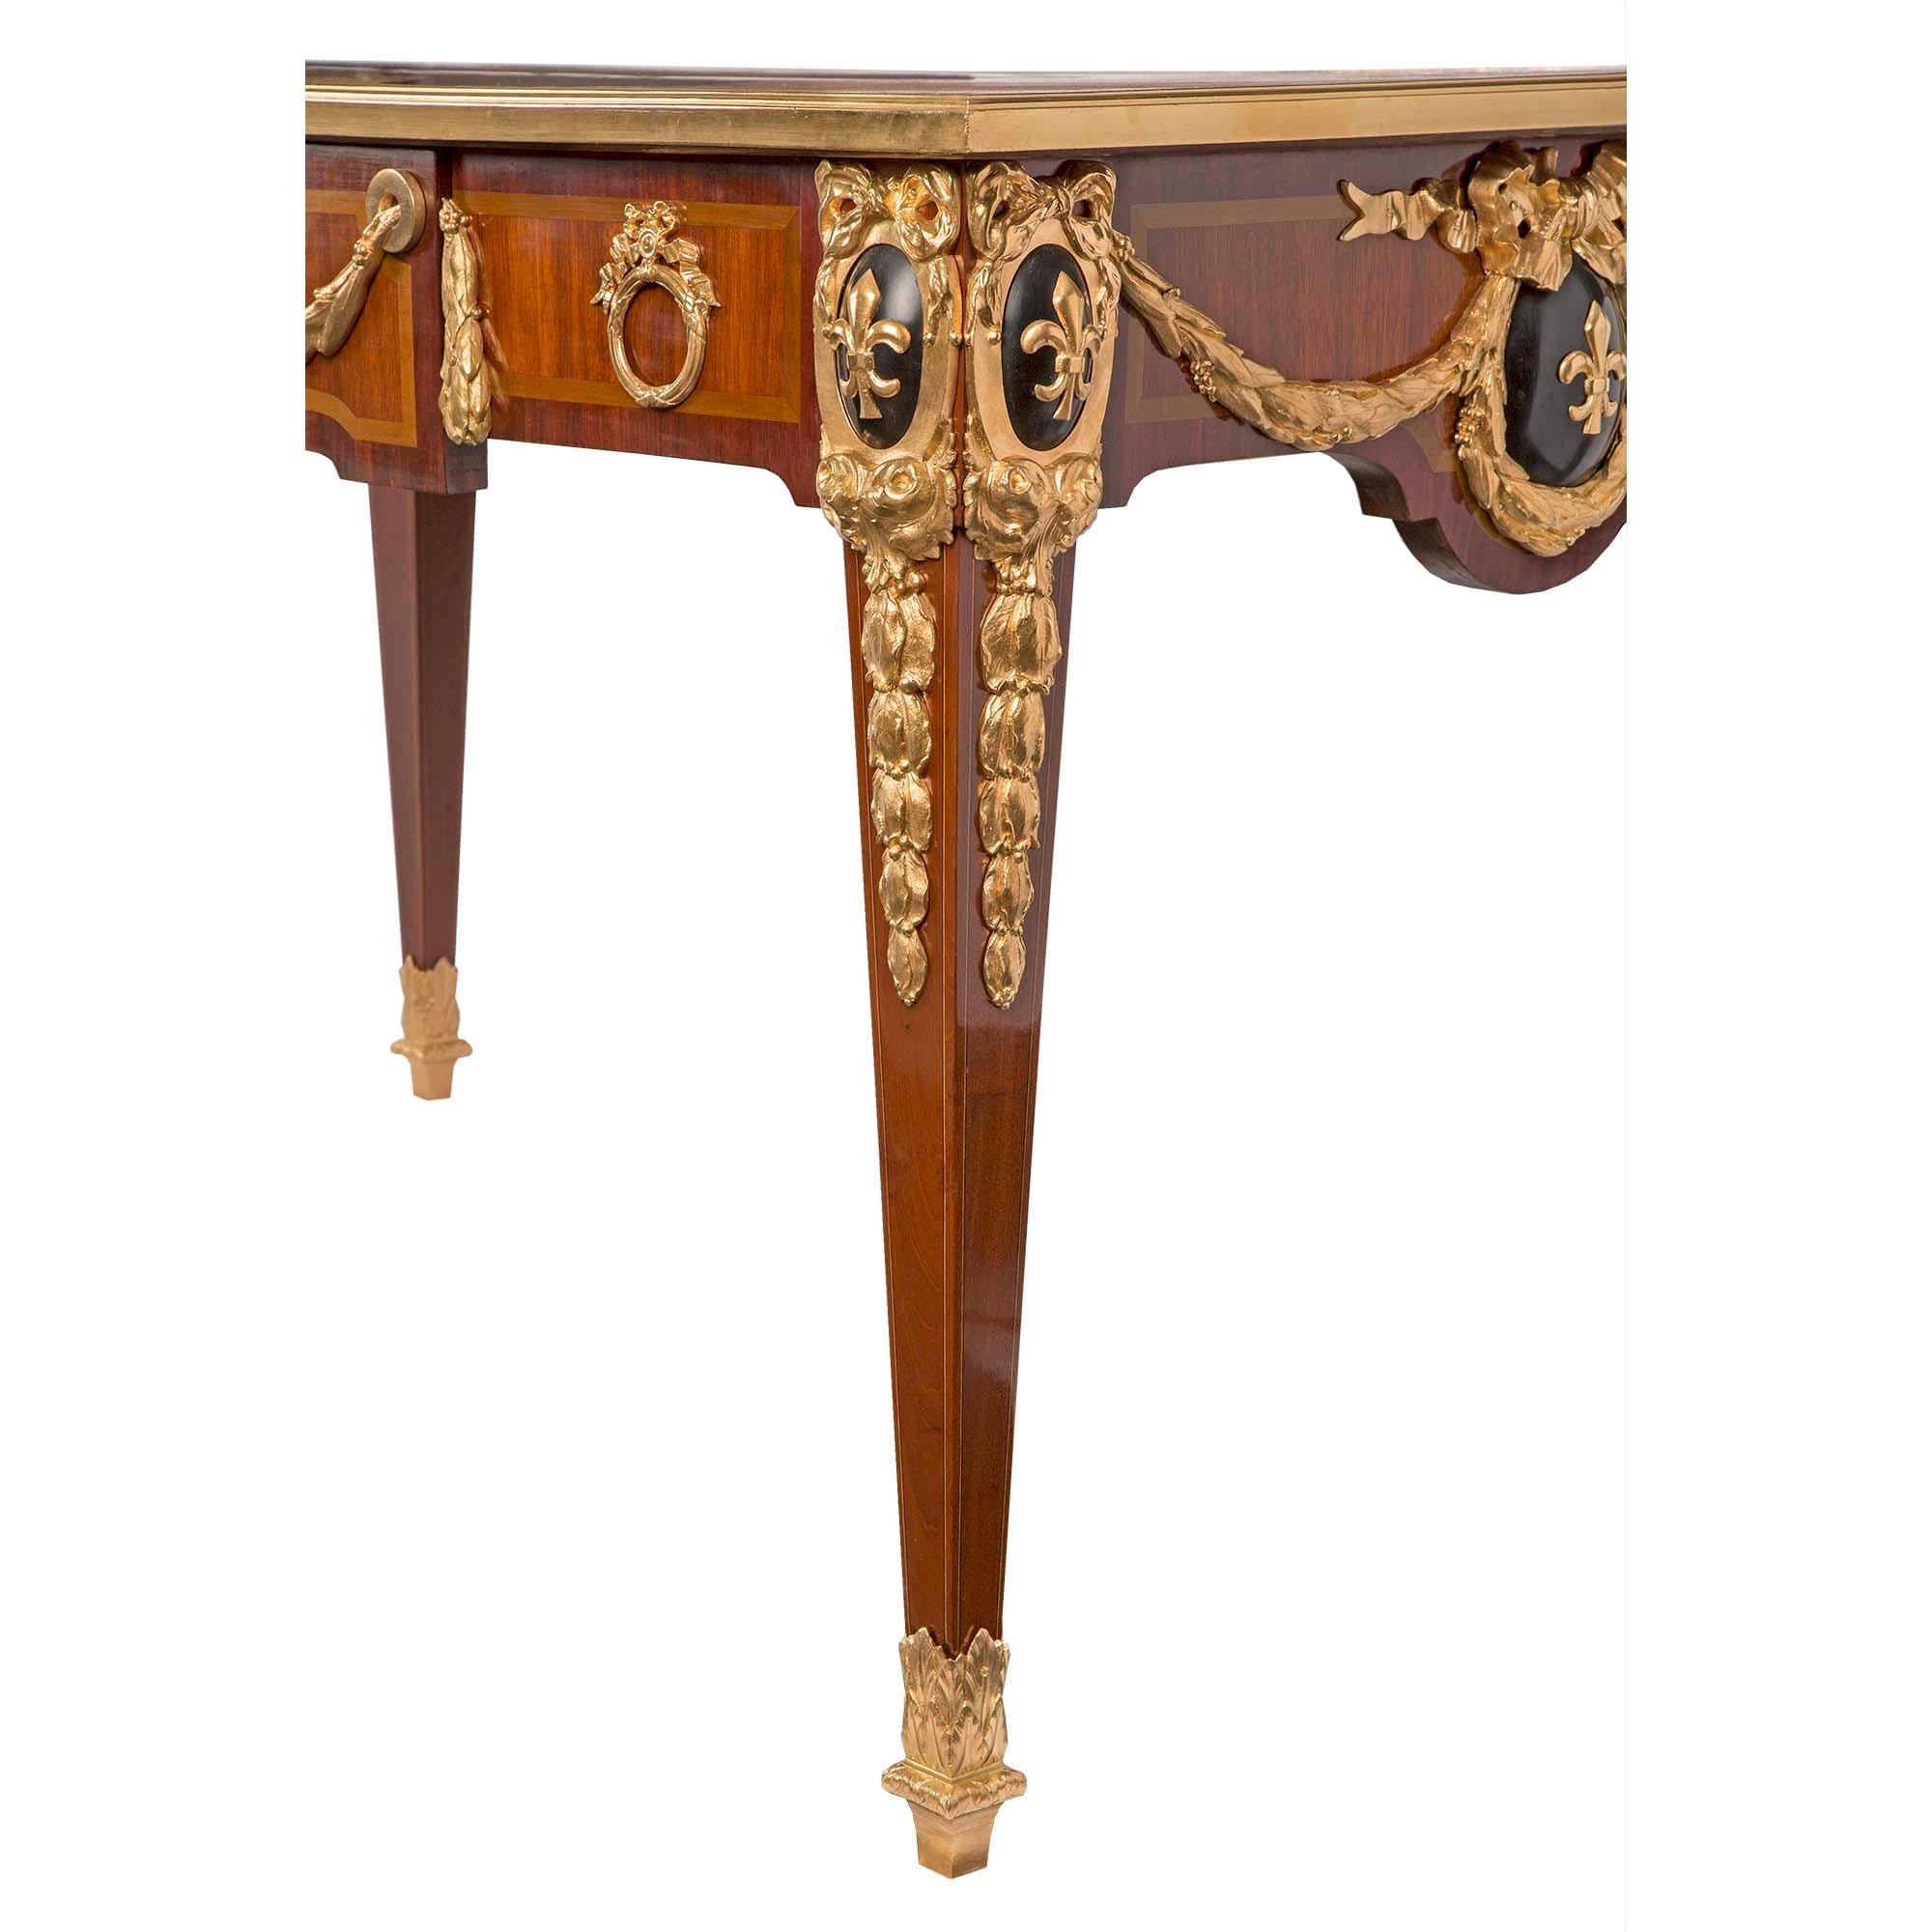 French 19th Century Louis XVI Style Mahogany and Ormolu Inlaid Bureau Plat For Sale 2